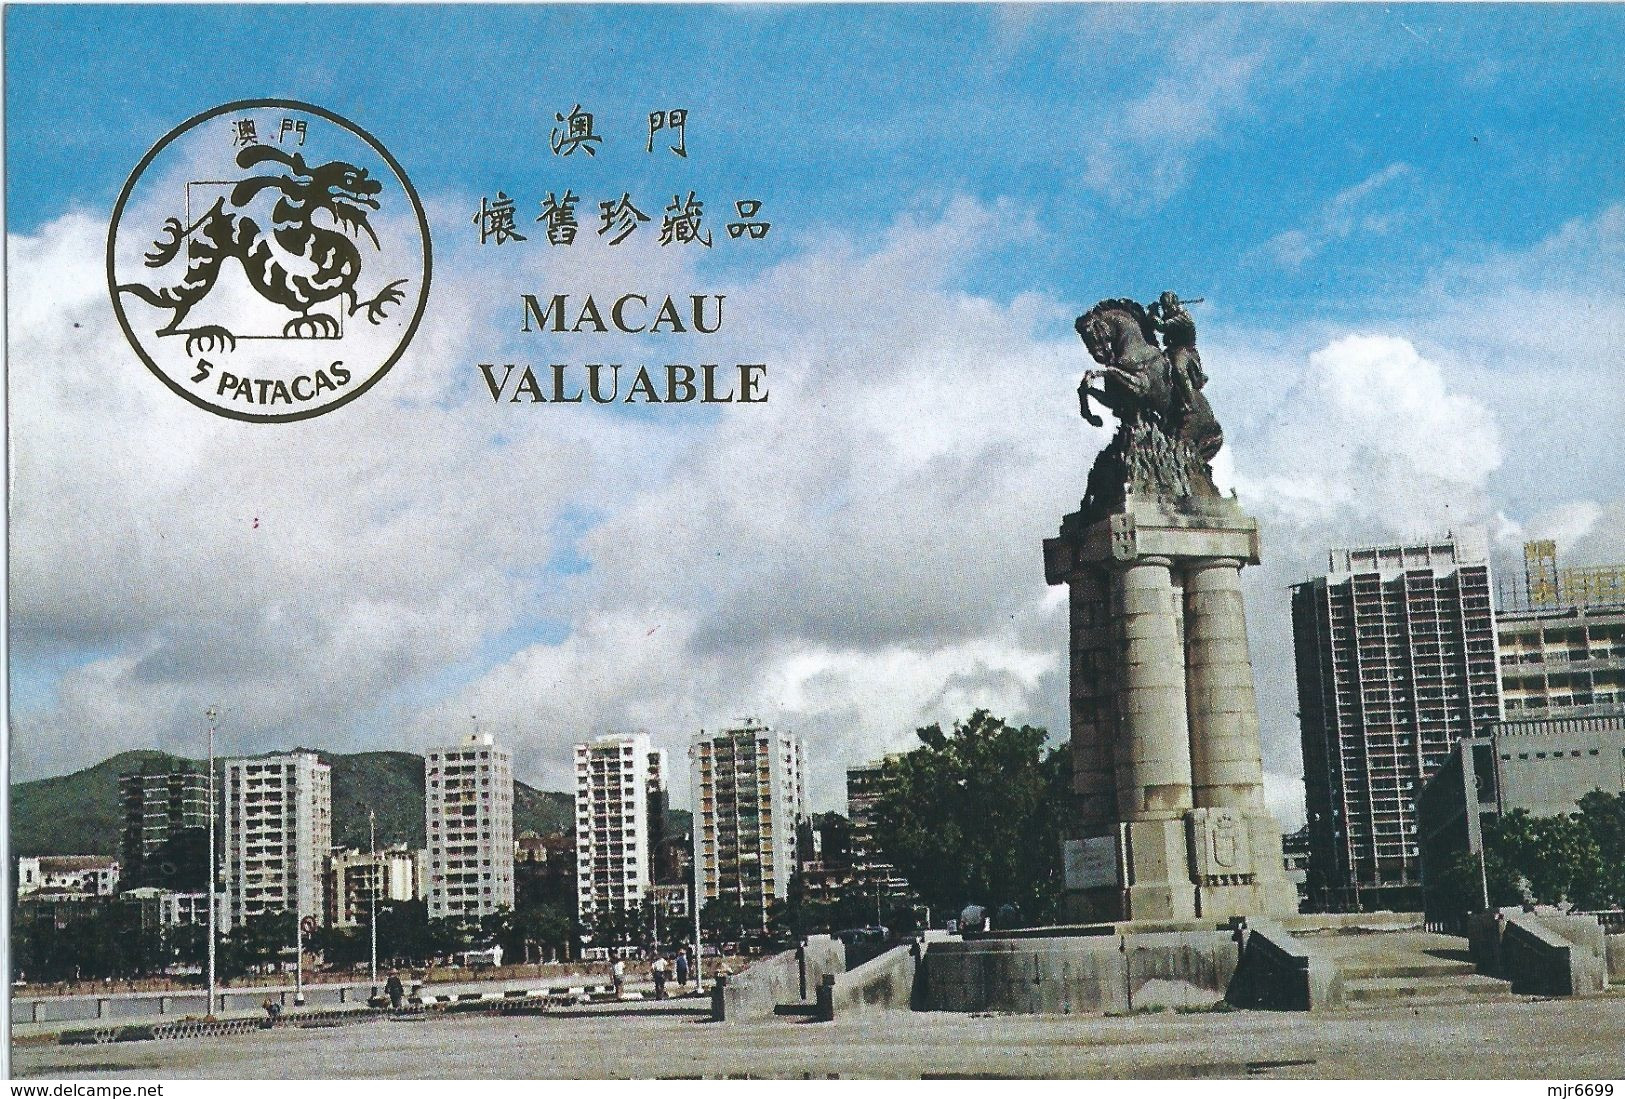 MACAU-THE MONUMENT TO AMARAL #12 (WITH JAPANESE DESCRIPTION) - Macau